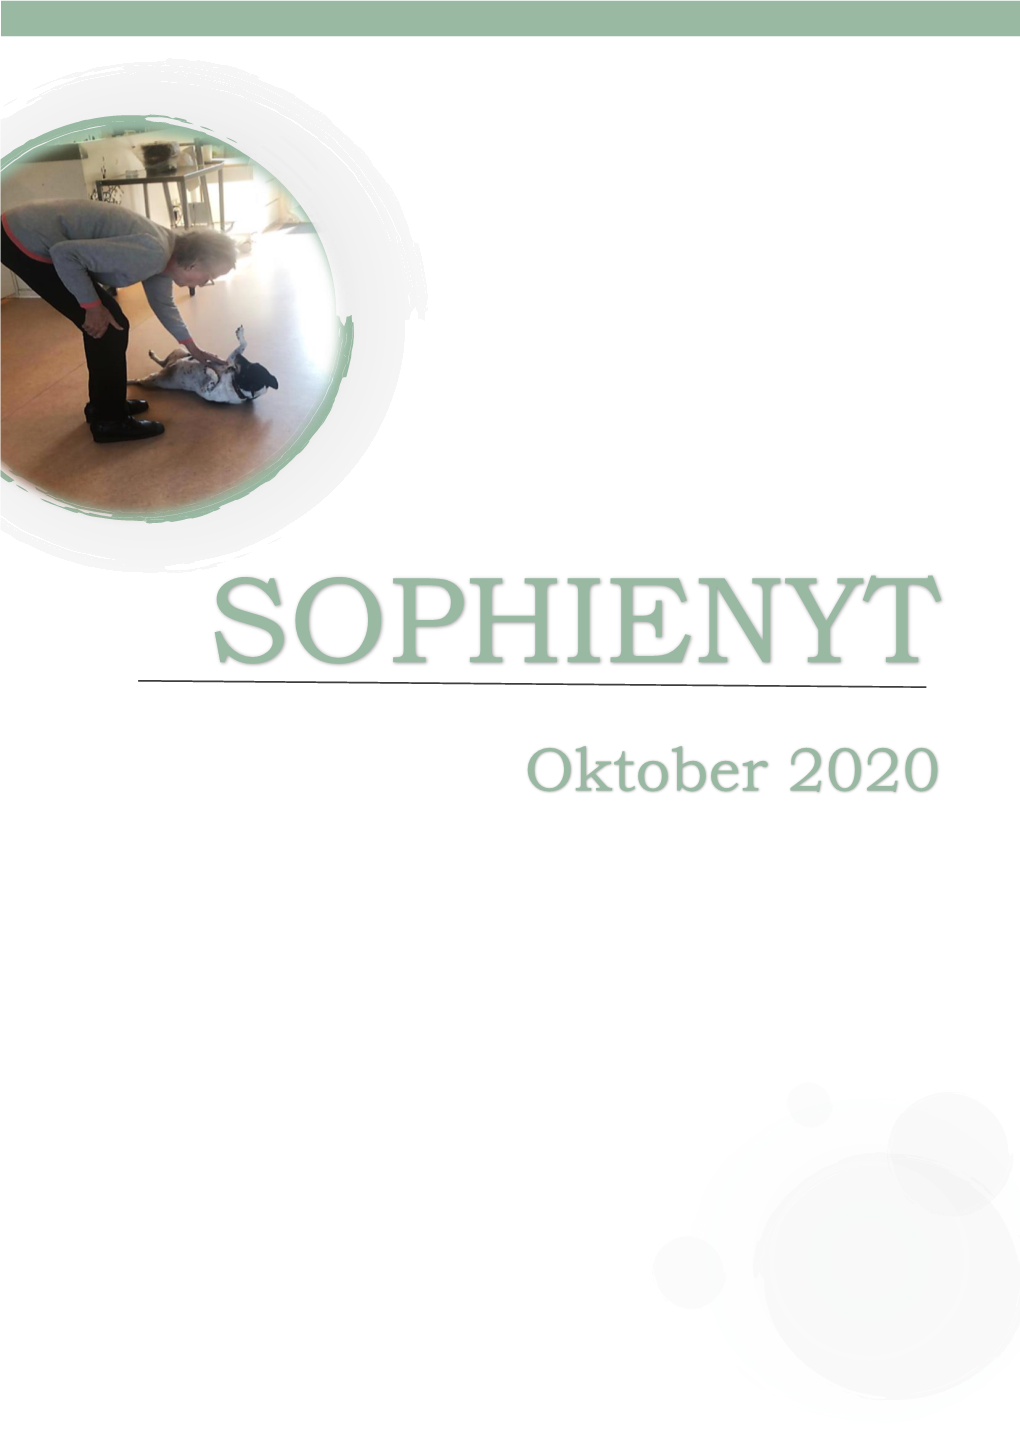 Oktober 2020